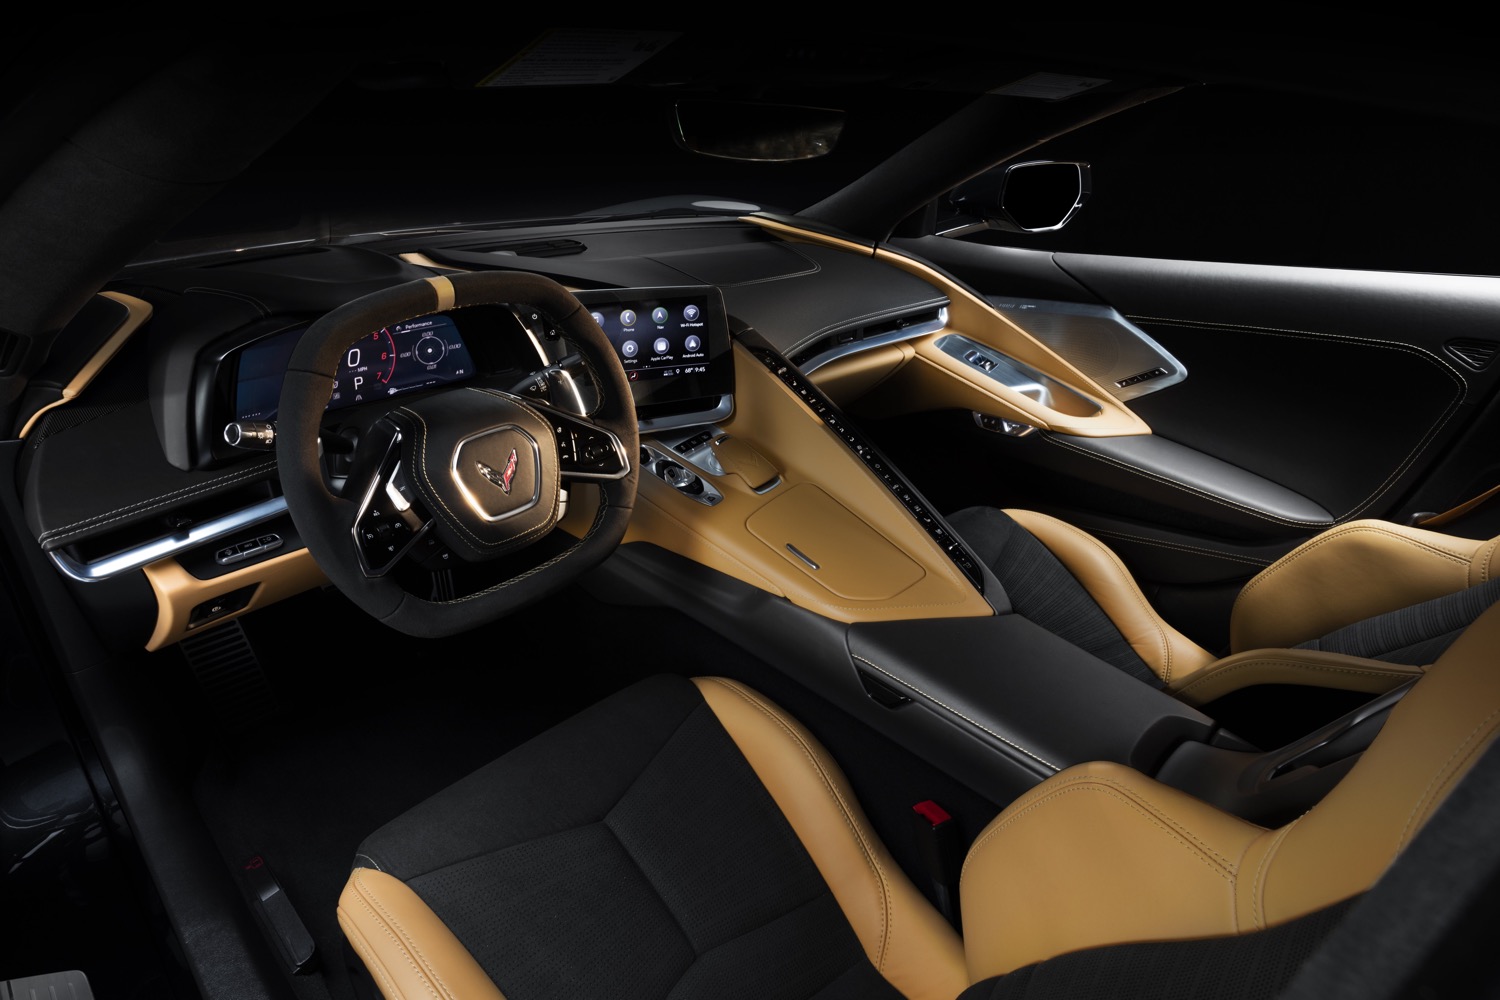 2021 Corvette Stingray Gets Wireless CarPlay, Android